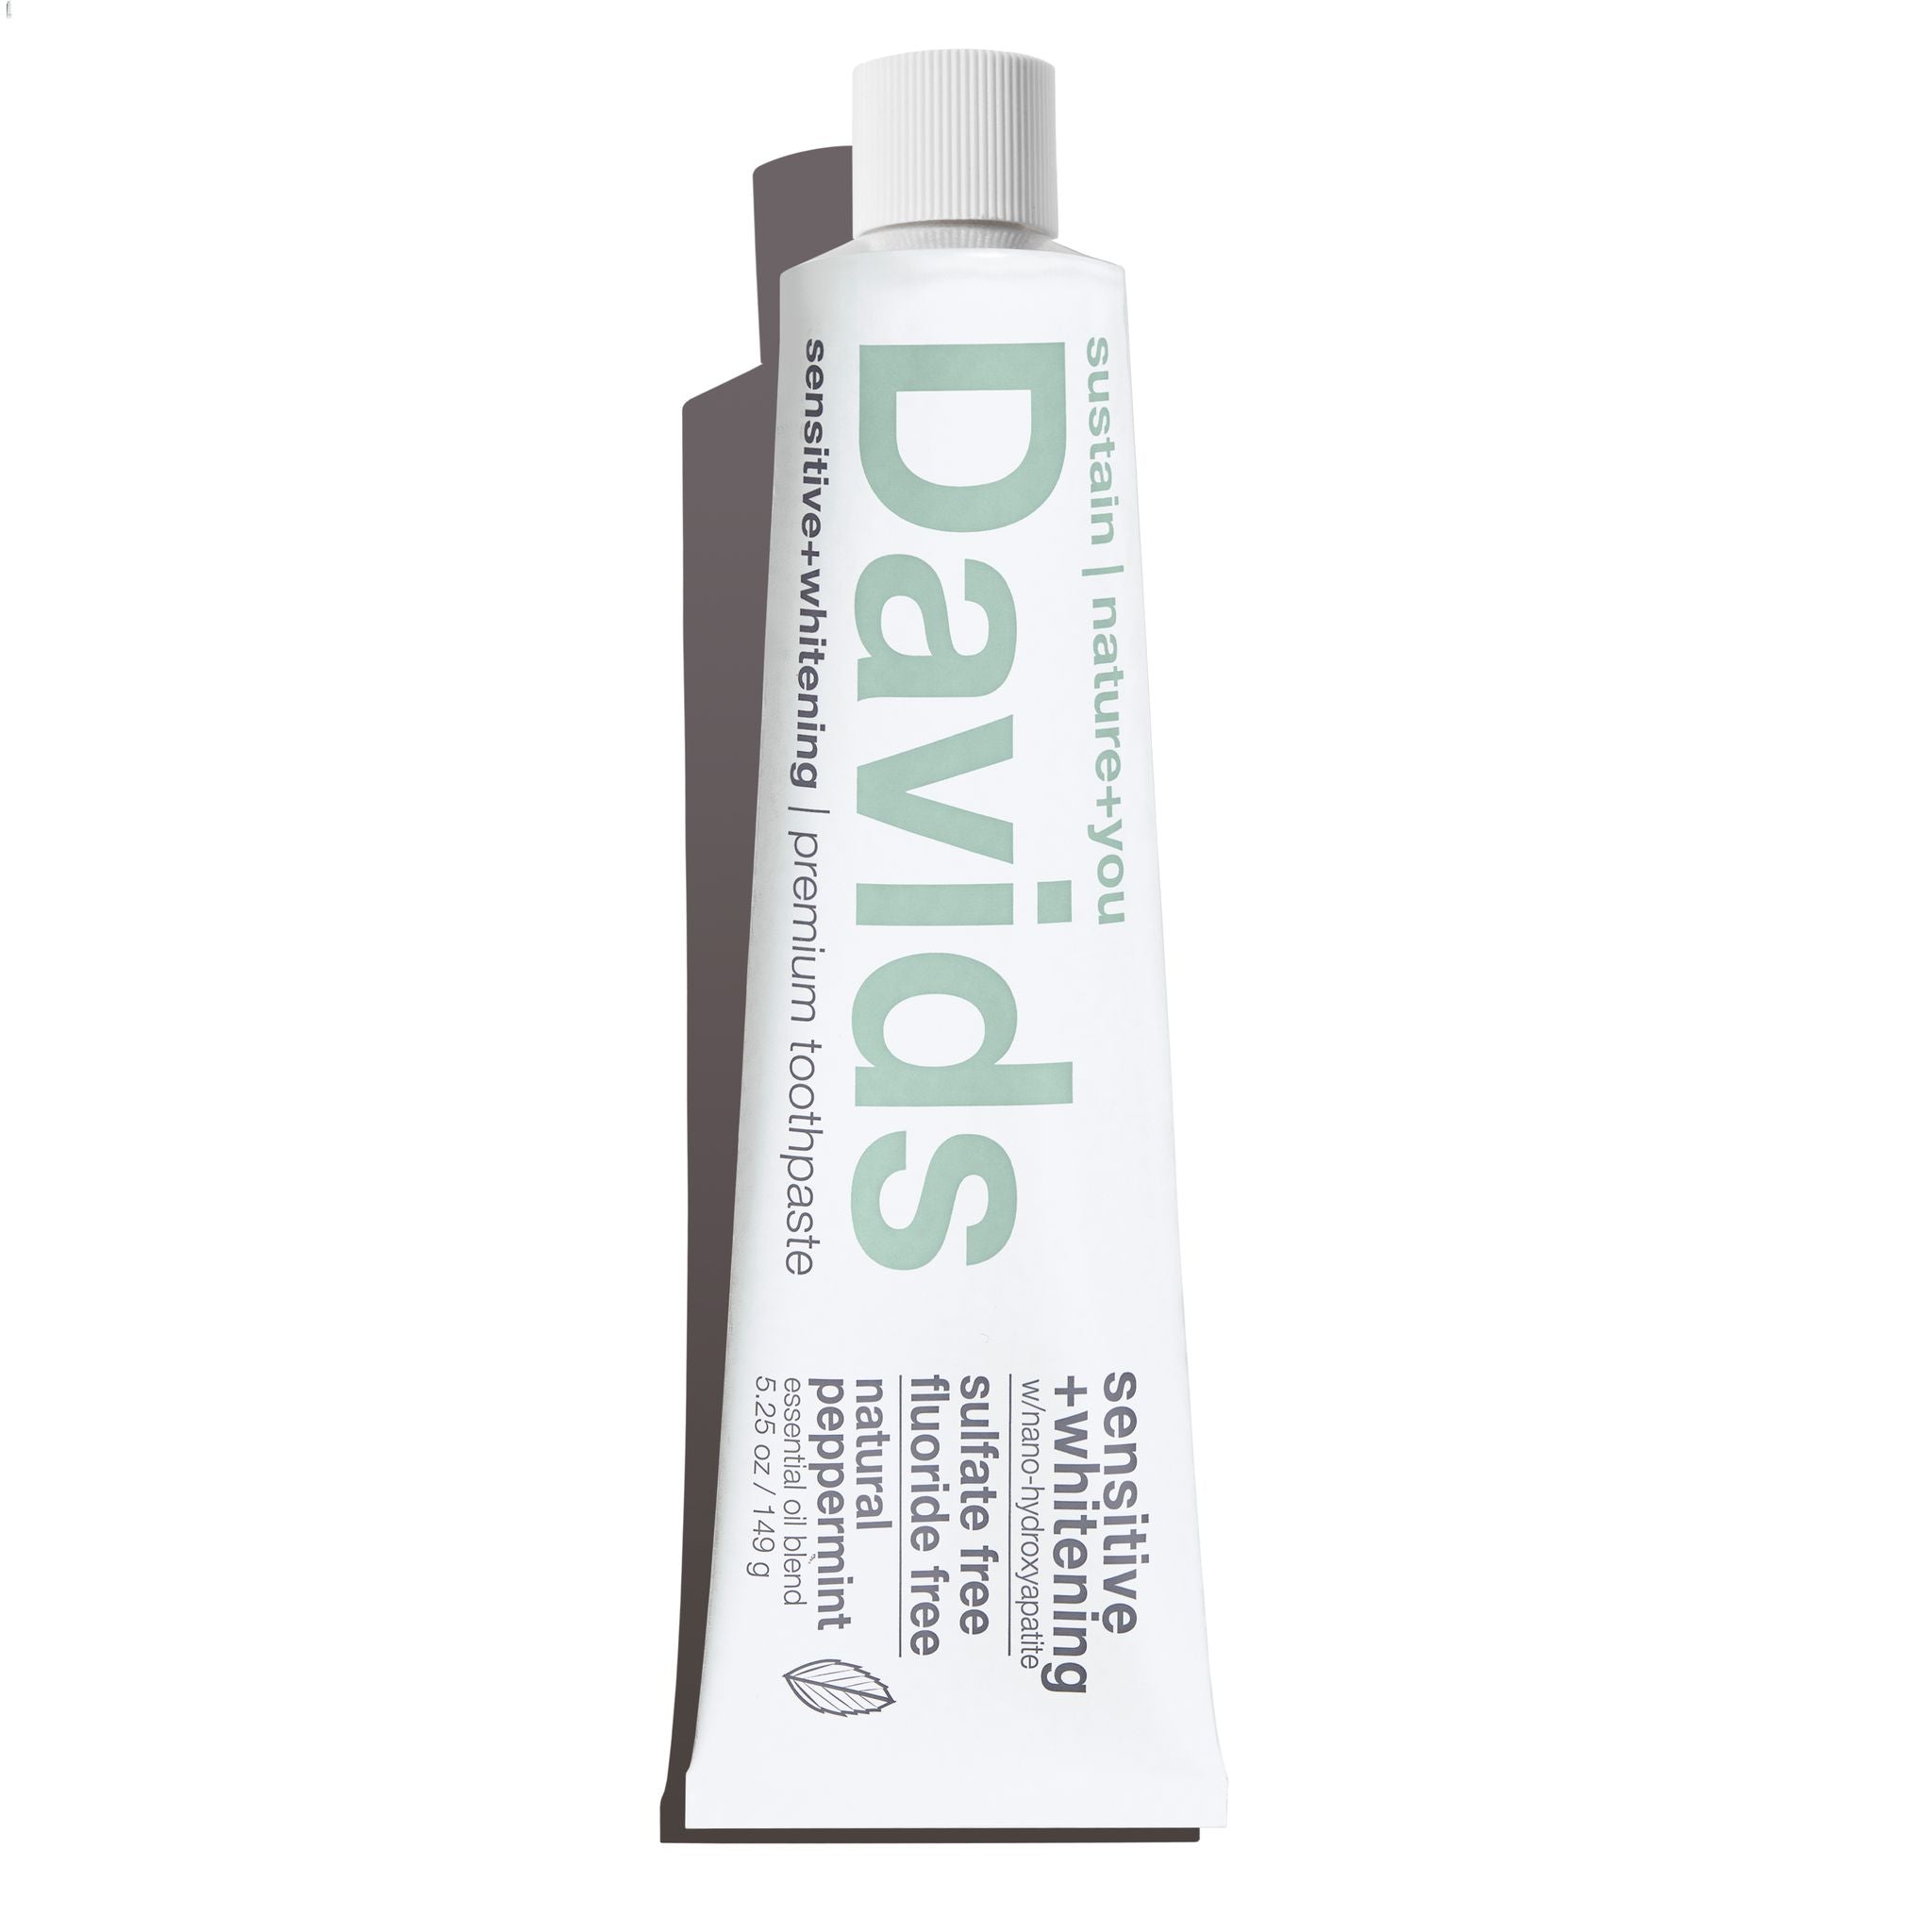 Davids sensitive+whitening nano-hydroxyapatite toothpaste